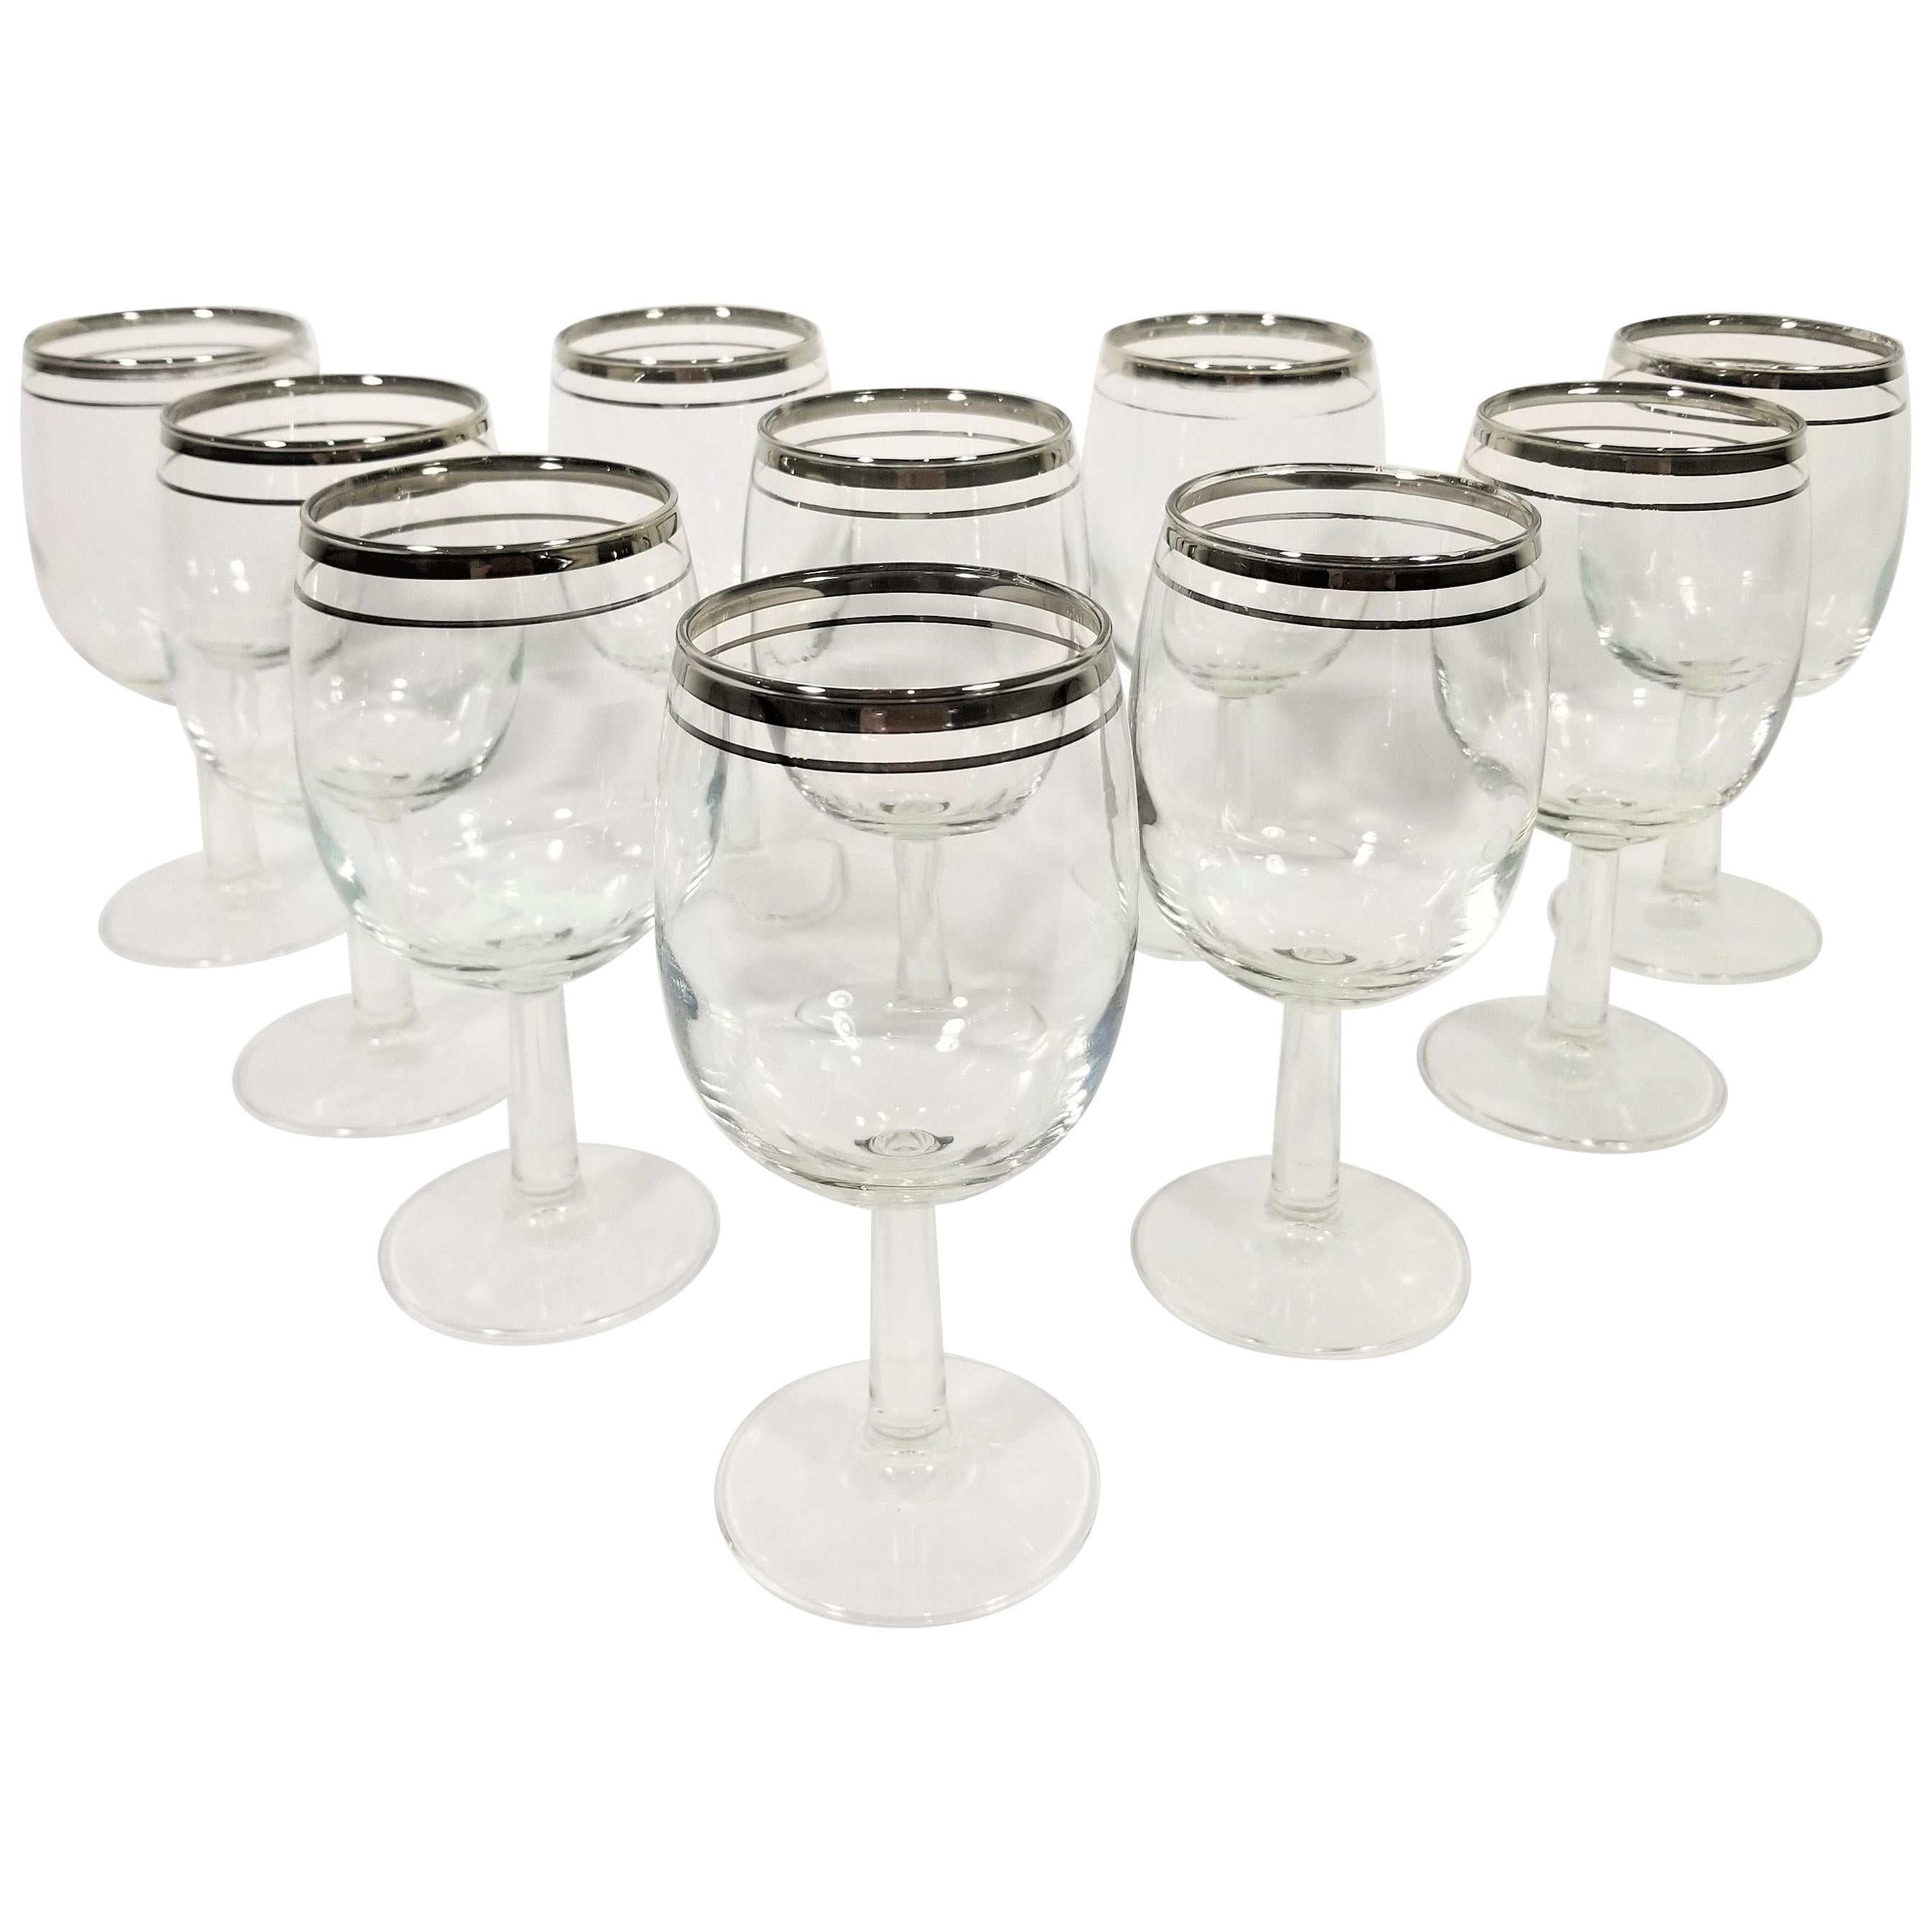 https://a.1stdibscdn.com/silver-rimmed-stemware-wine-glasses-mid-century-set-of-10-for-sale/1121189/f_225562221614015712486/22556222_master.jpg